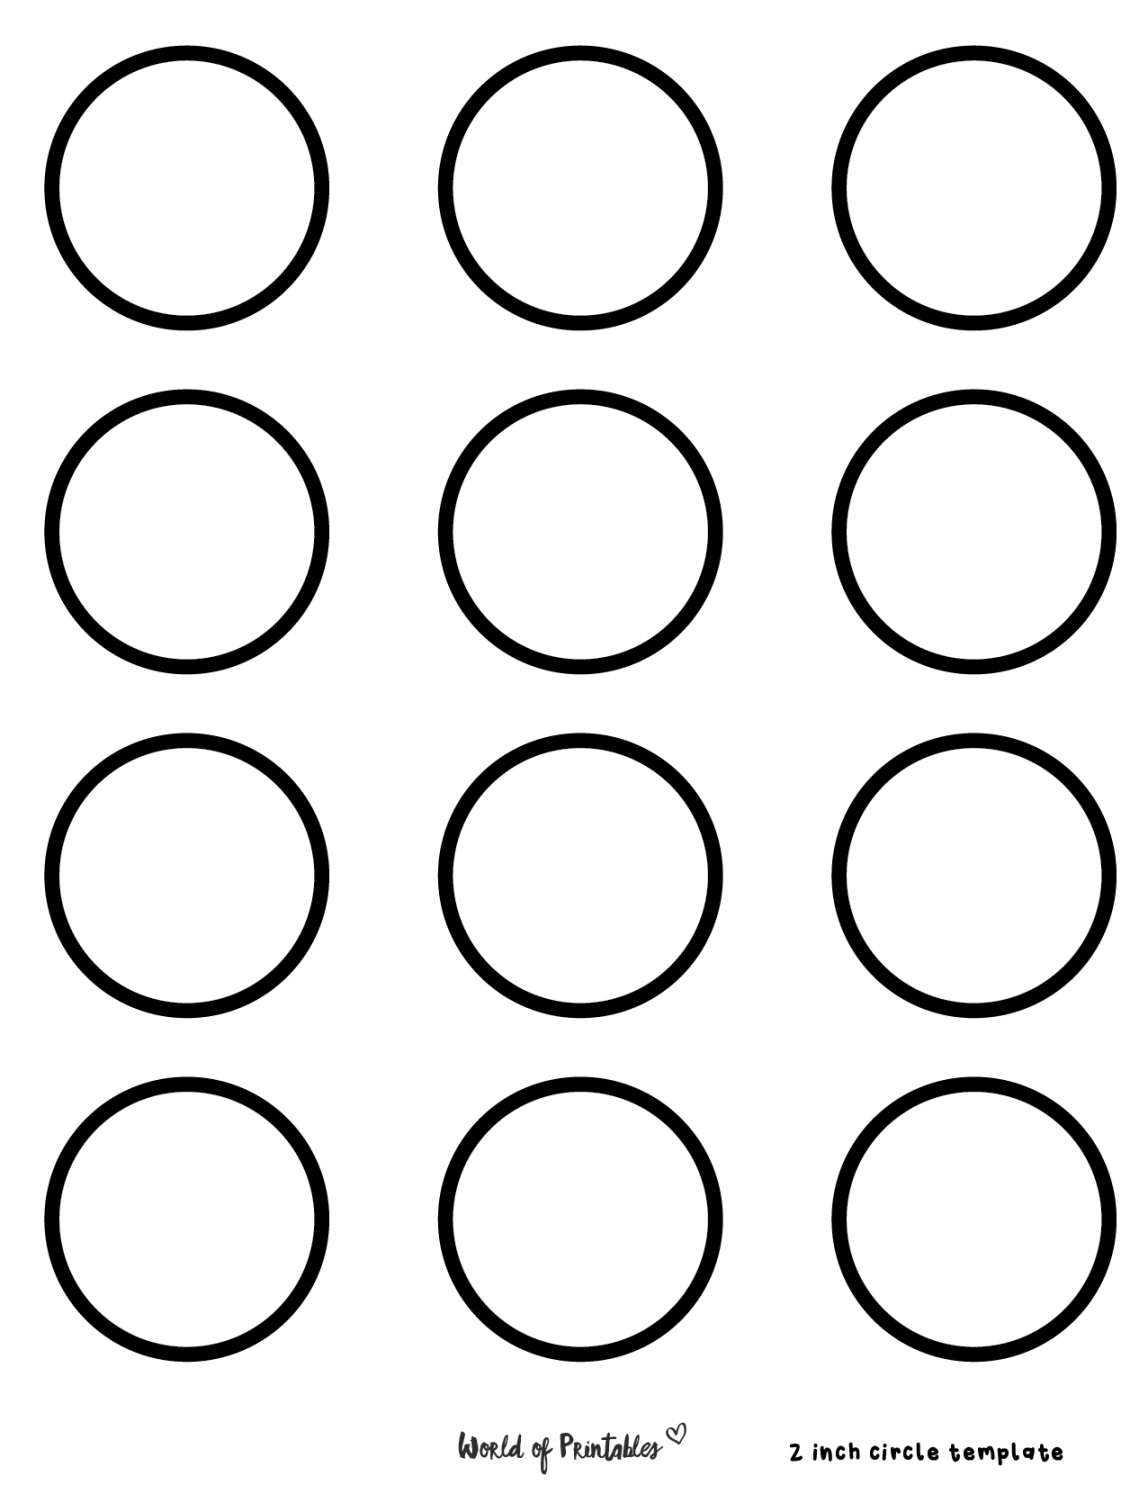 Free Printable Circle Templates - Various Sizes - World of Printables - FREE Printables - Circles To Print Out